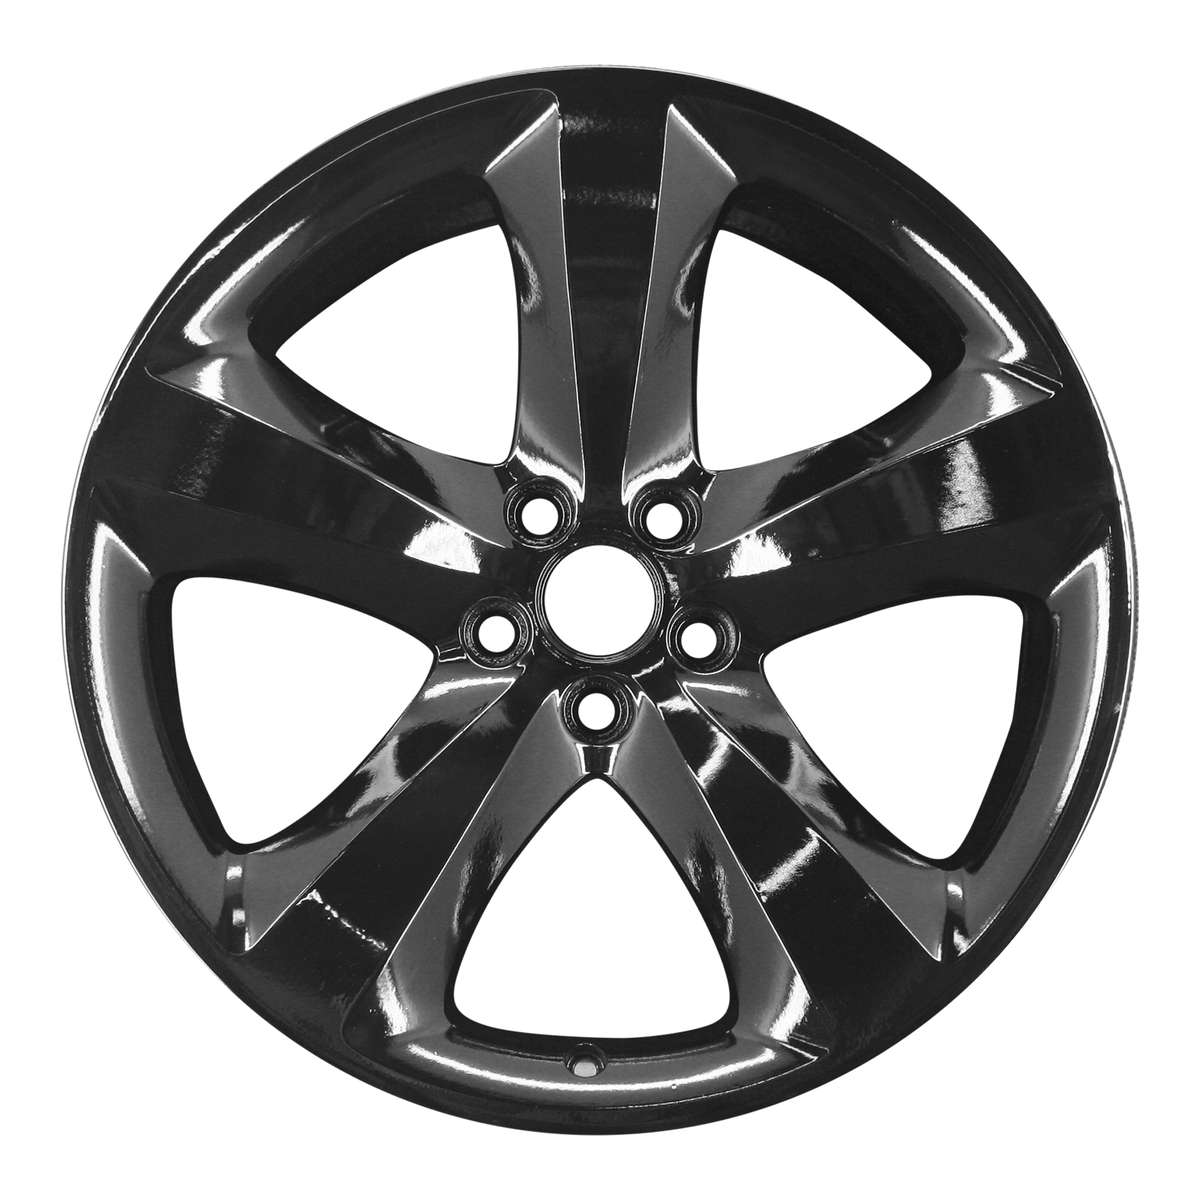 2014 Dodge Charger 20" OEM Wheel Rim W2461B